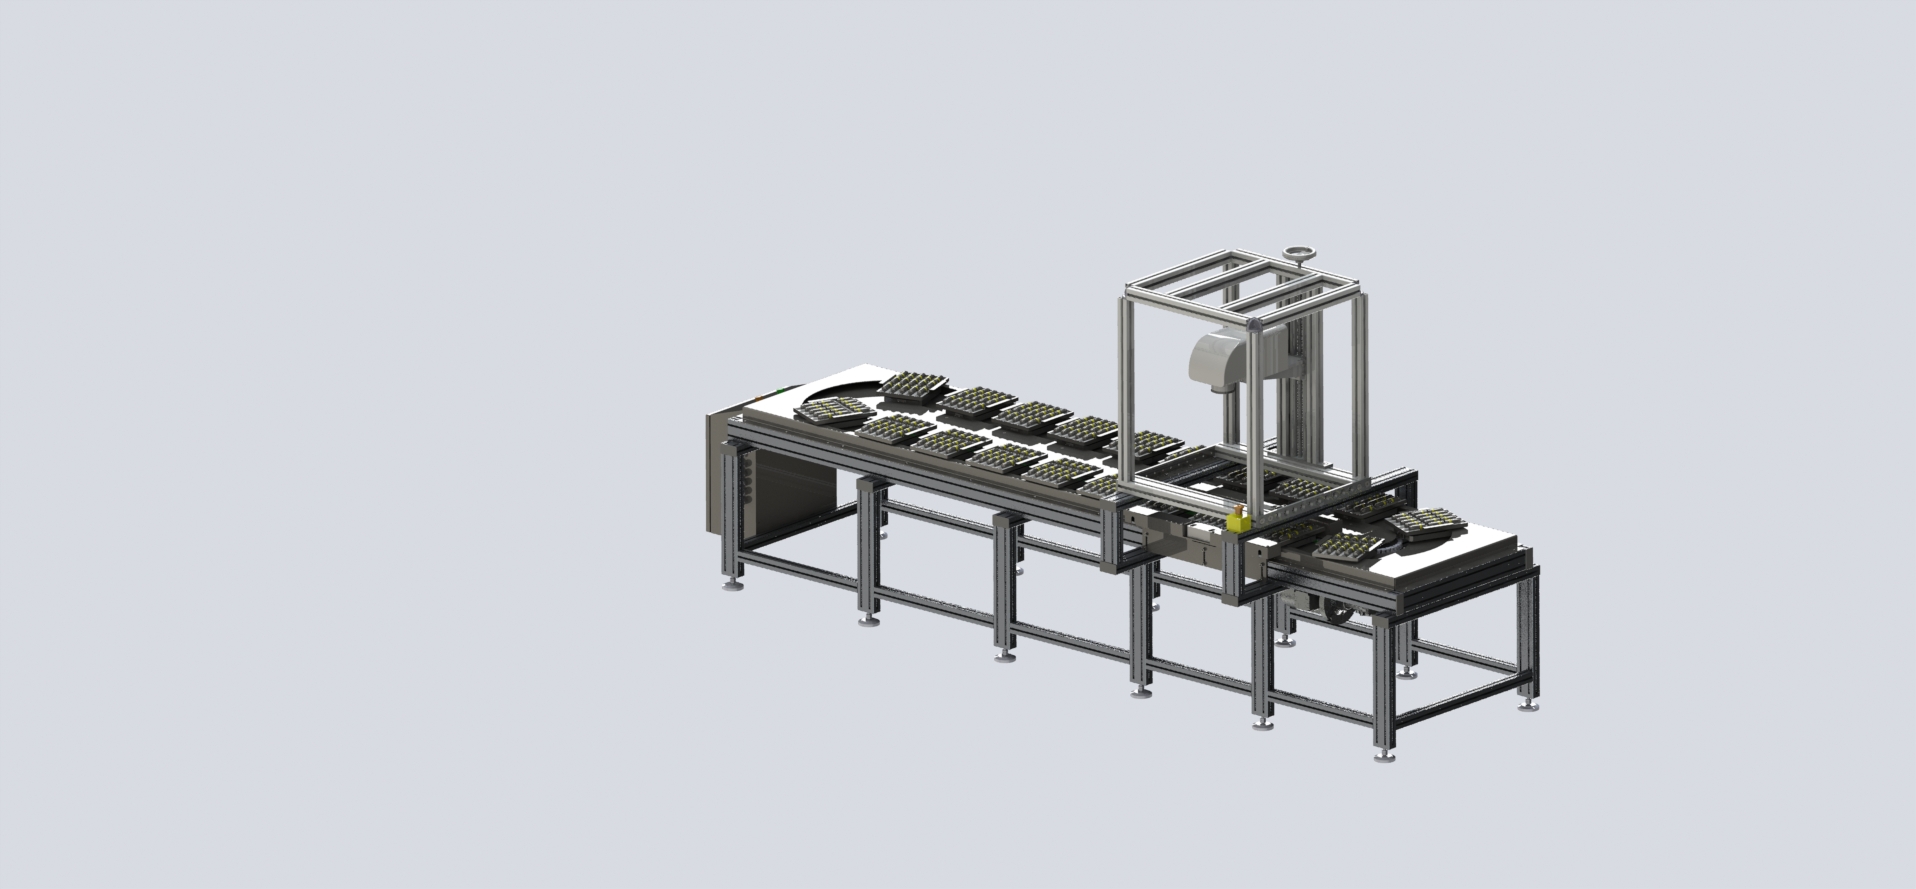 Printer Carucel工业印刷系统